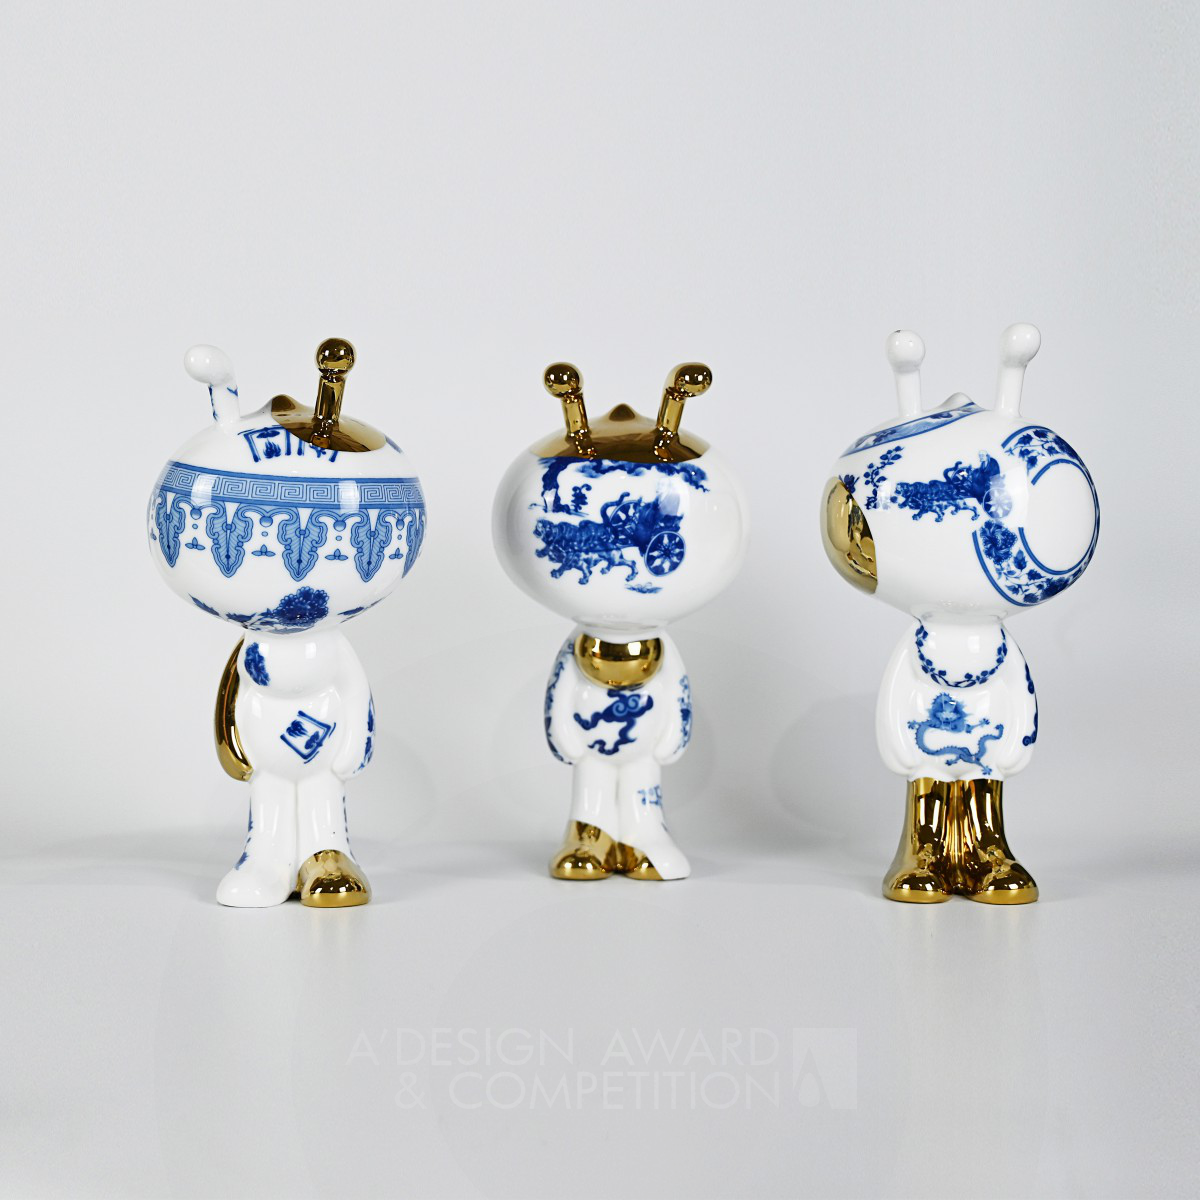 Chao Yang Ceramic Crafts